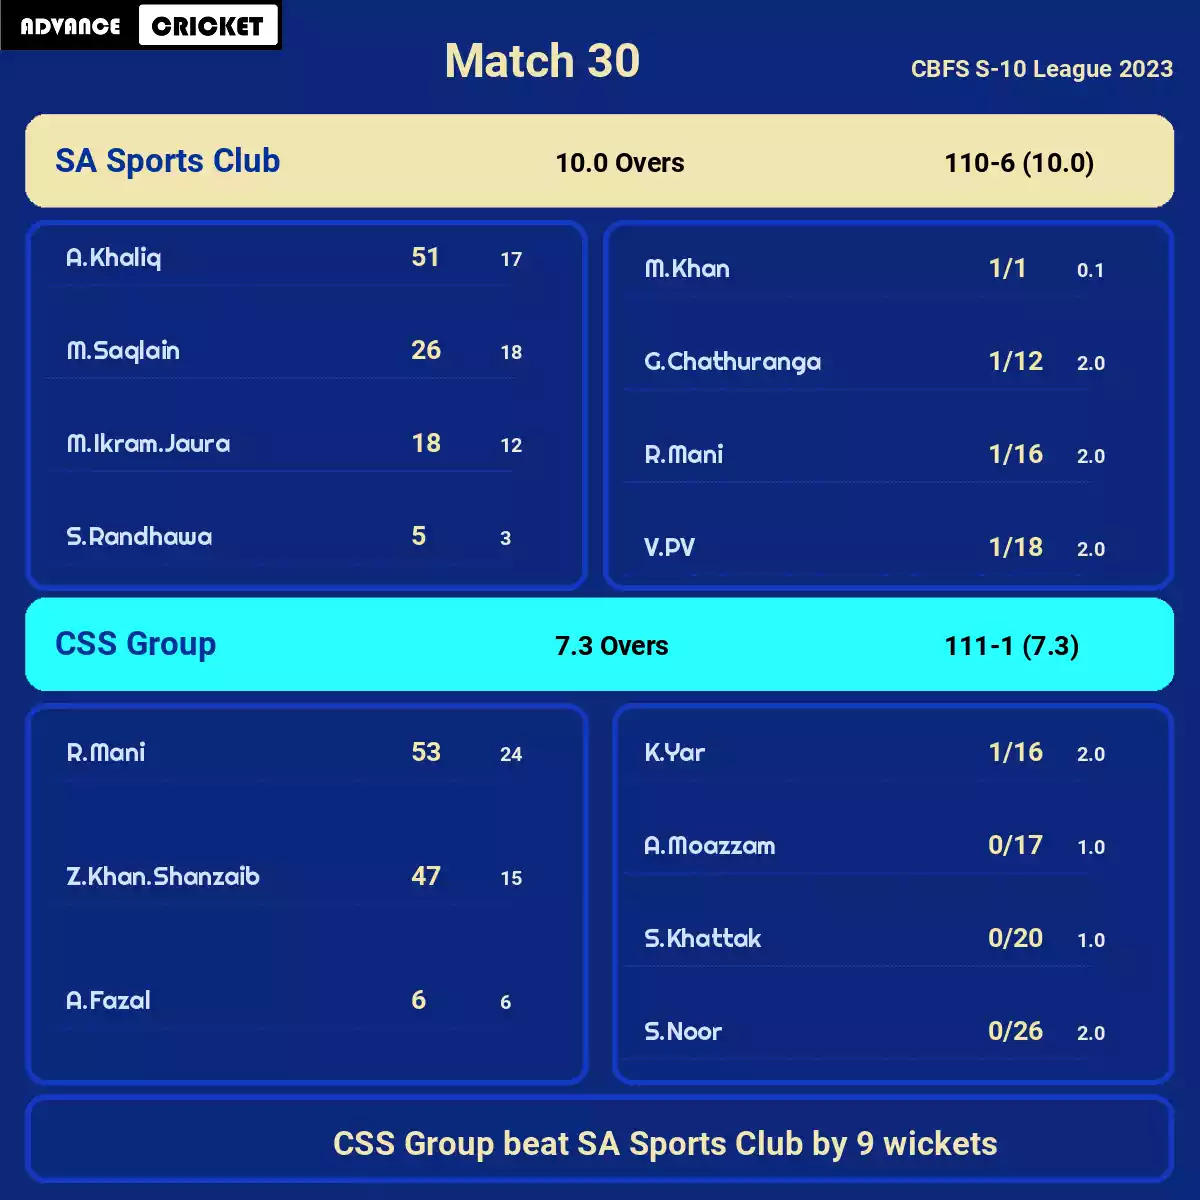 SSC vs CSG Match 30 CBFS S-10 League 2023